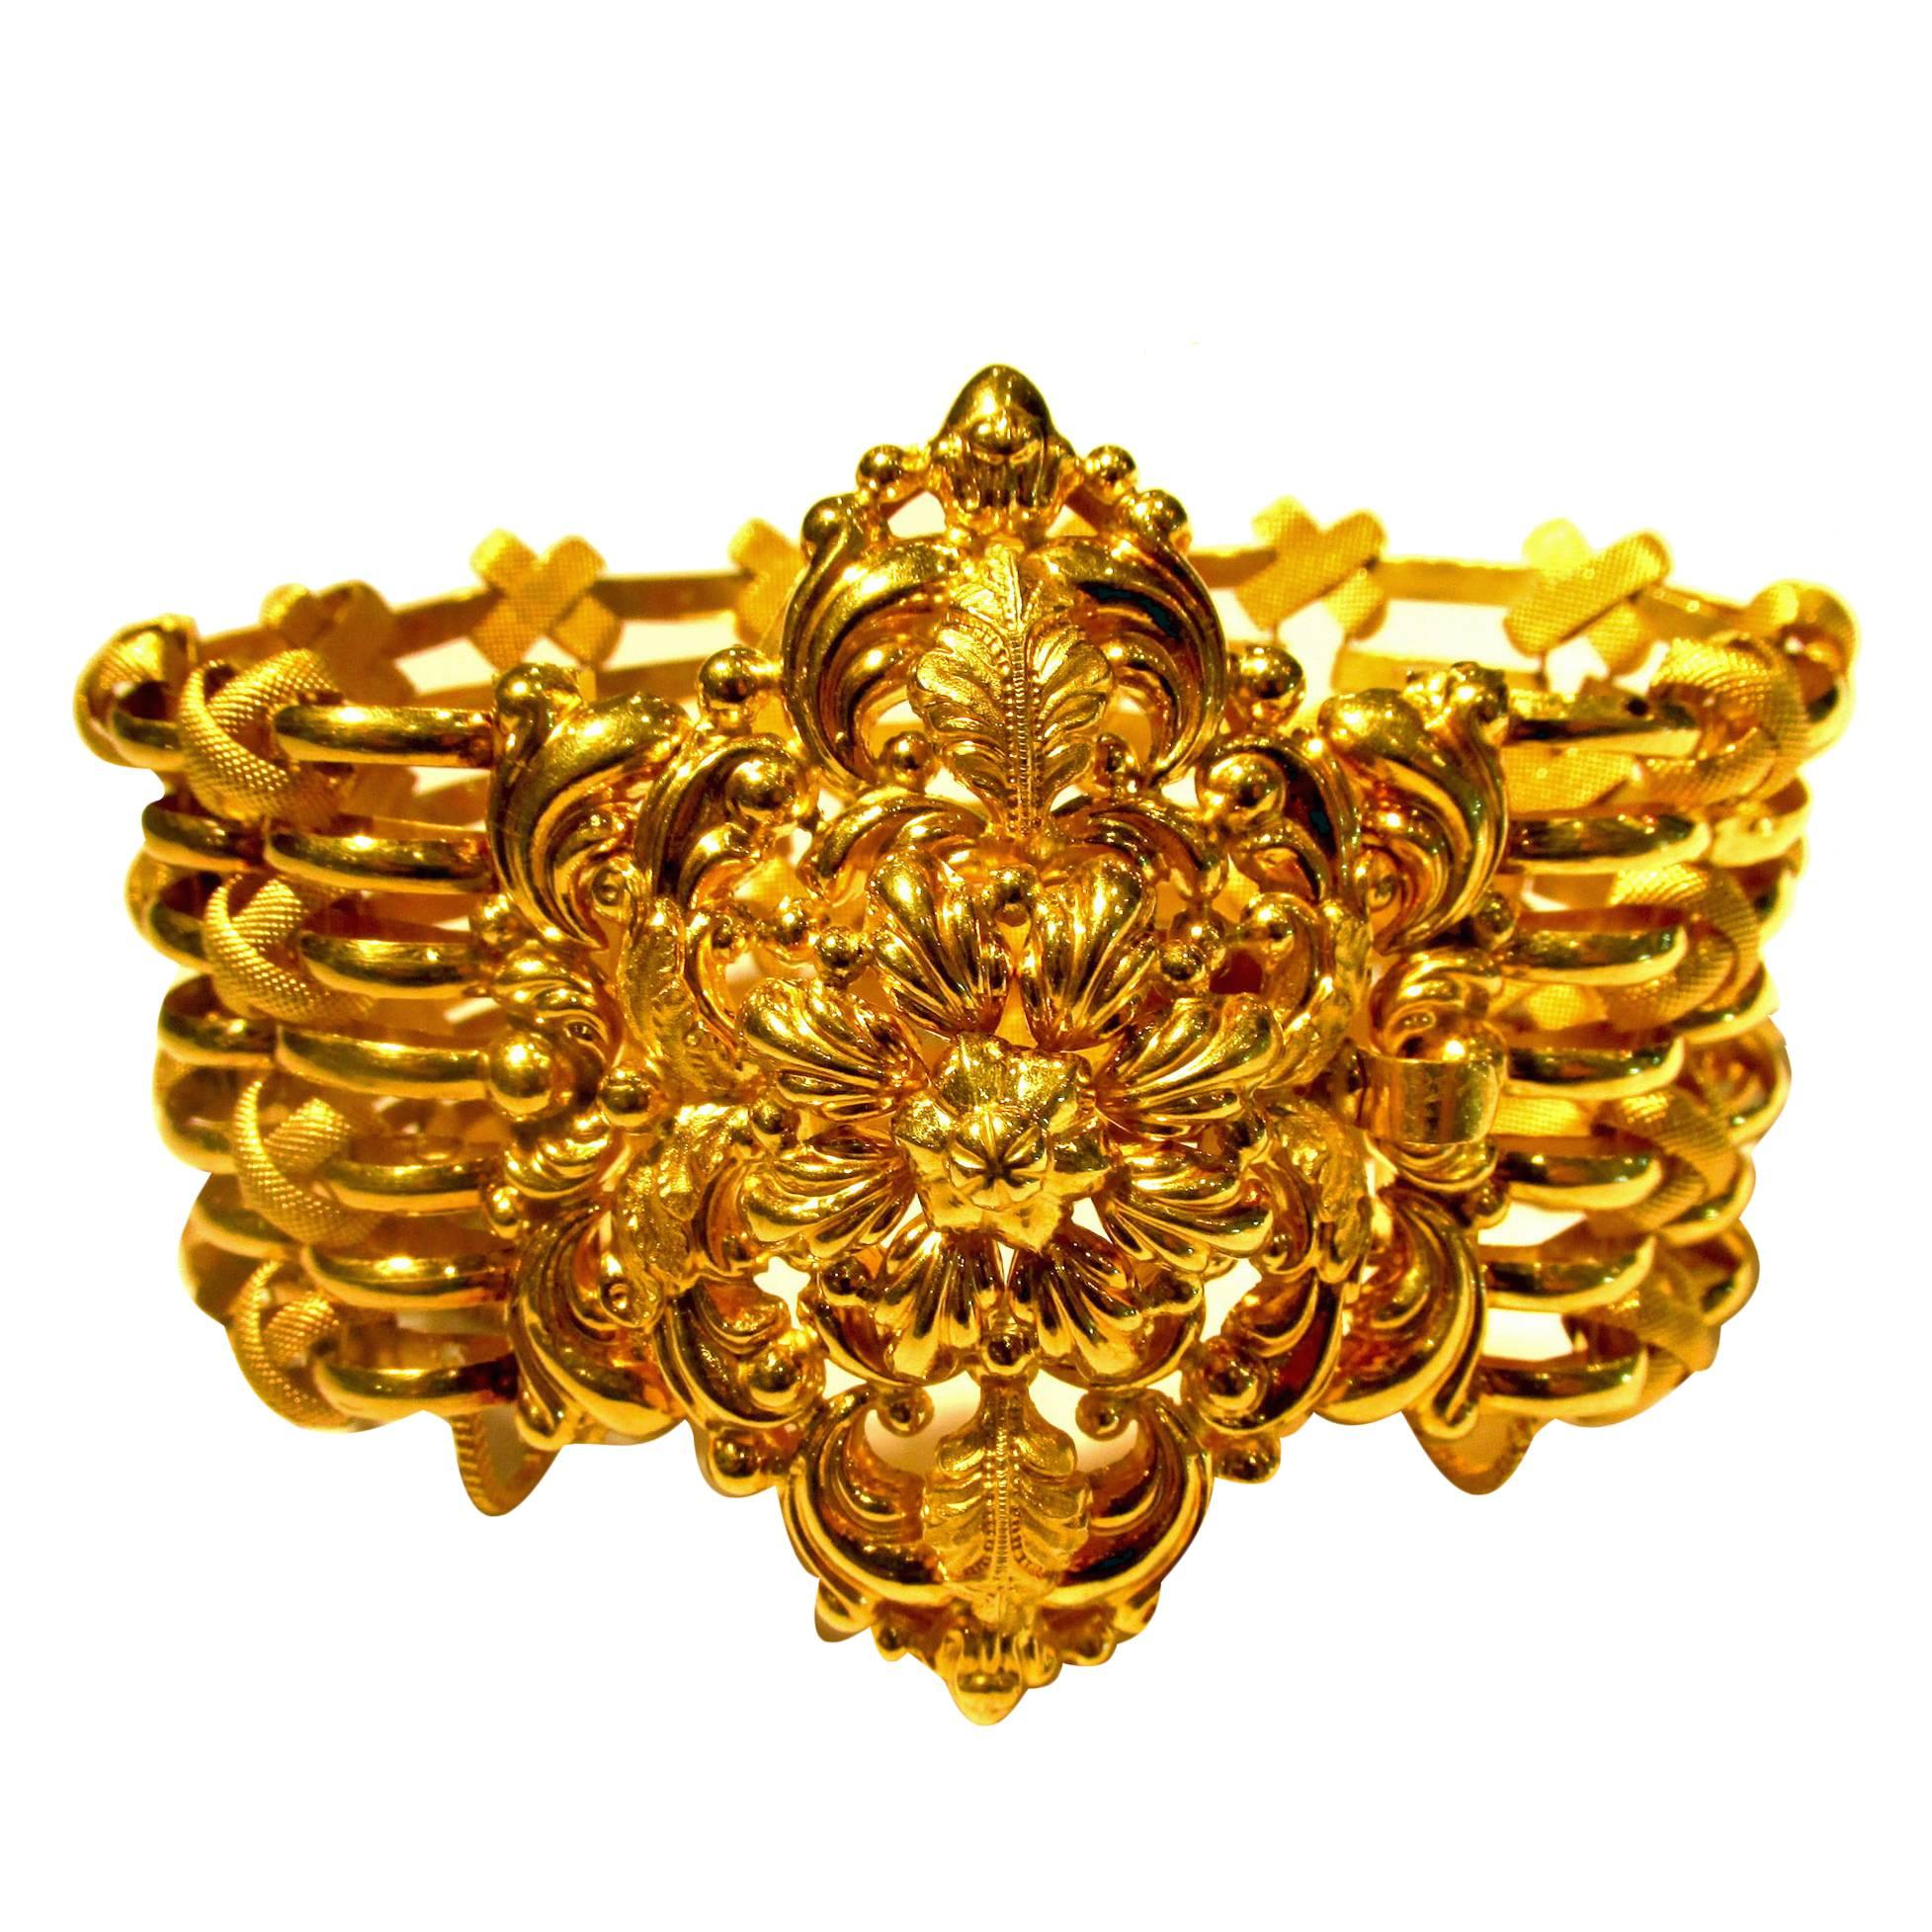 Antique French 18K Gold Cuff Bracelet, c1800bv